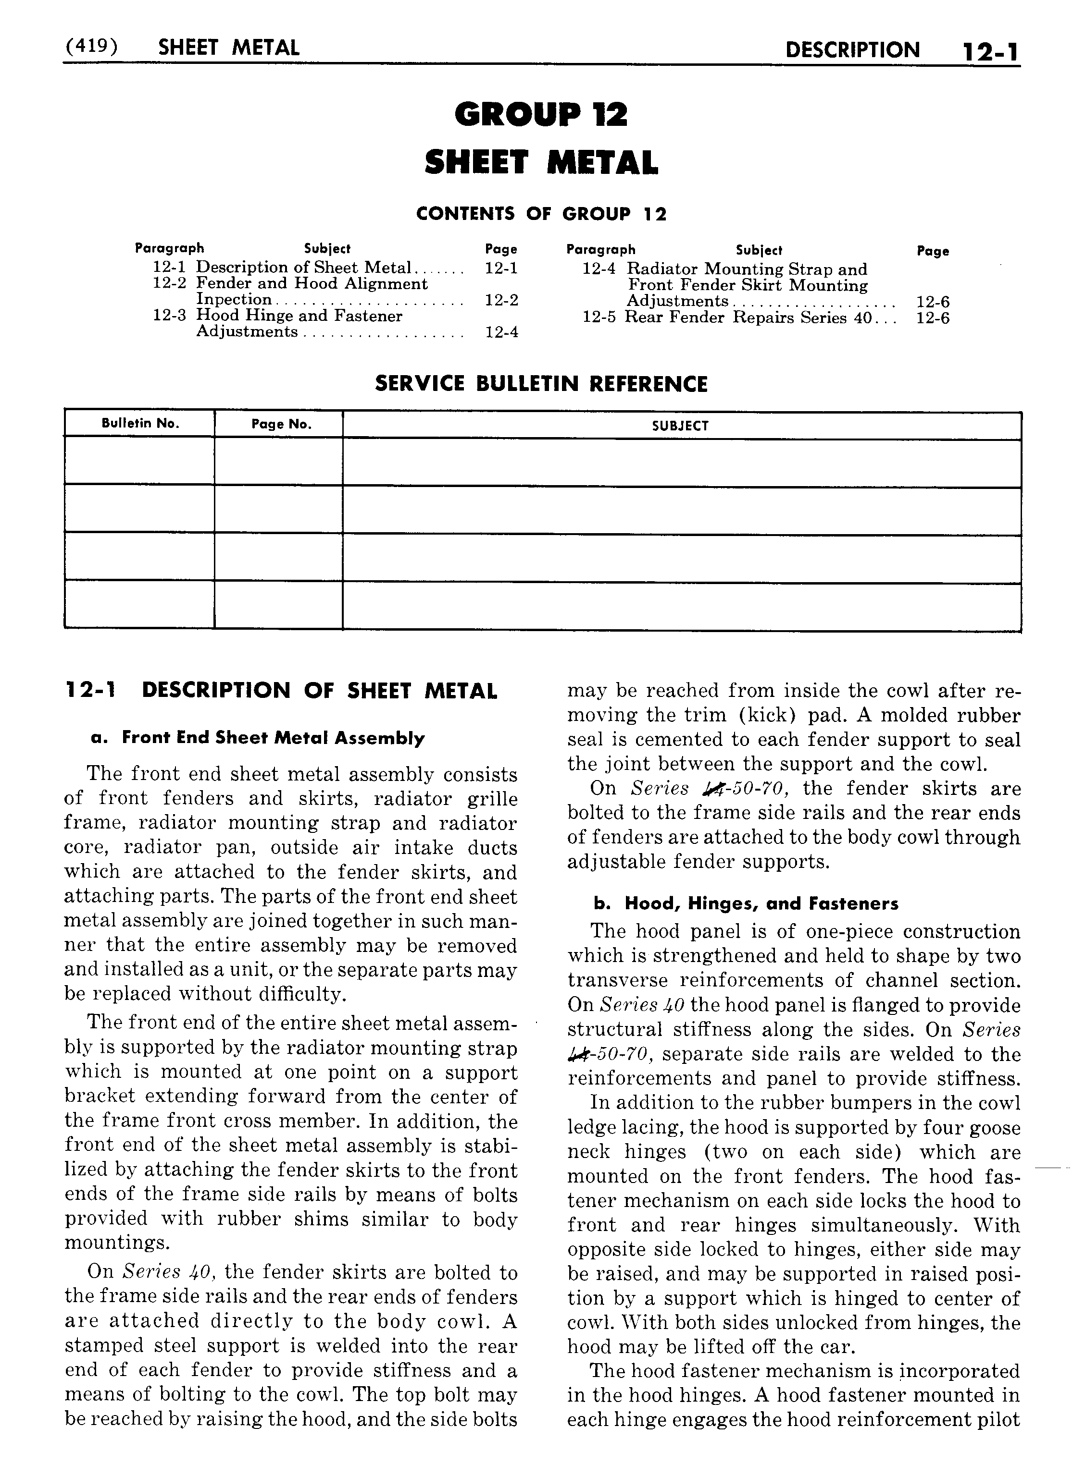 n_13 1951 Buick Shop Manual - Sheet Metal-001-001.jpg